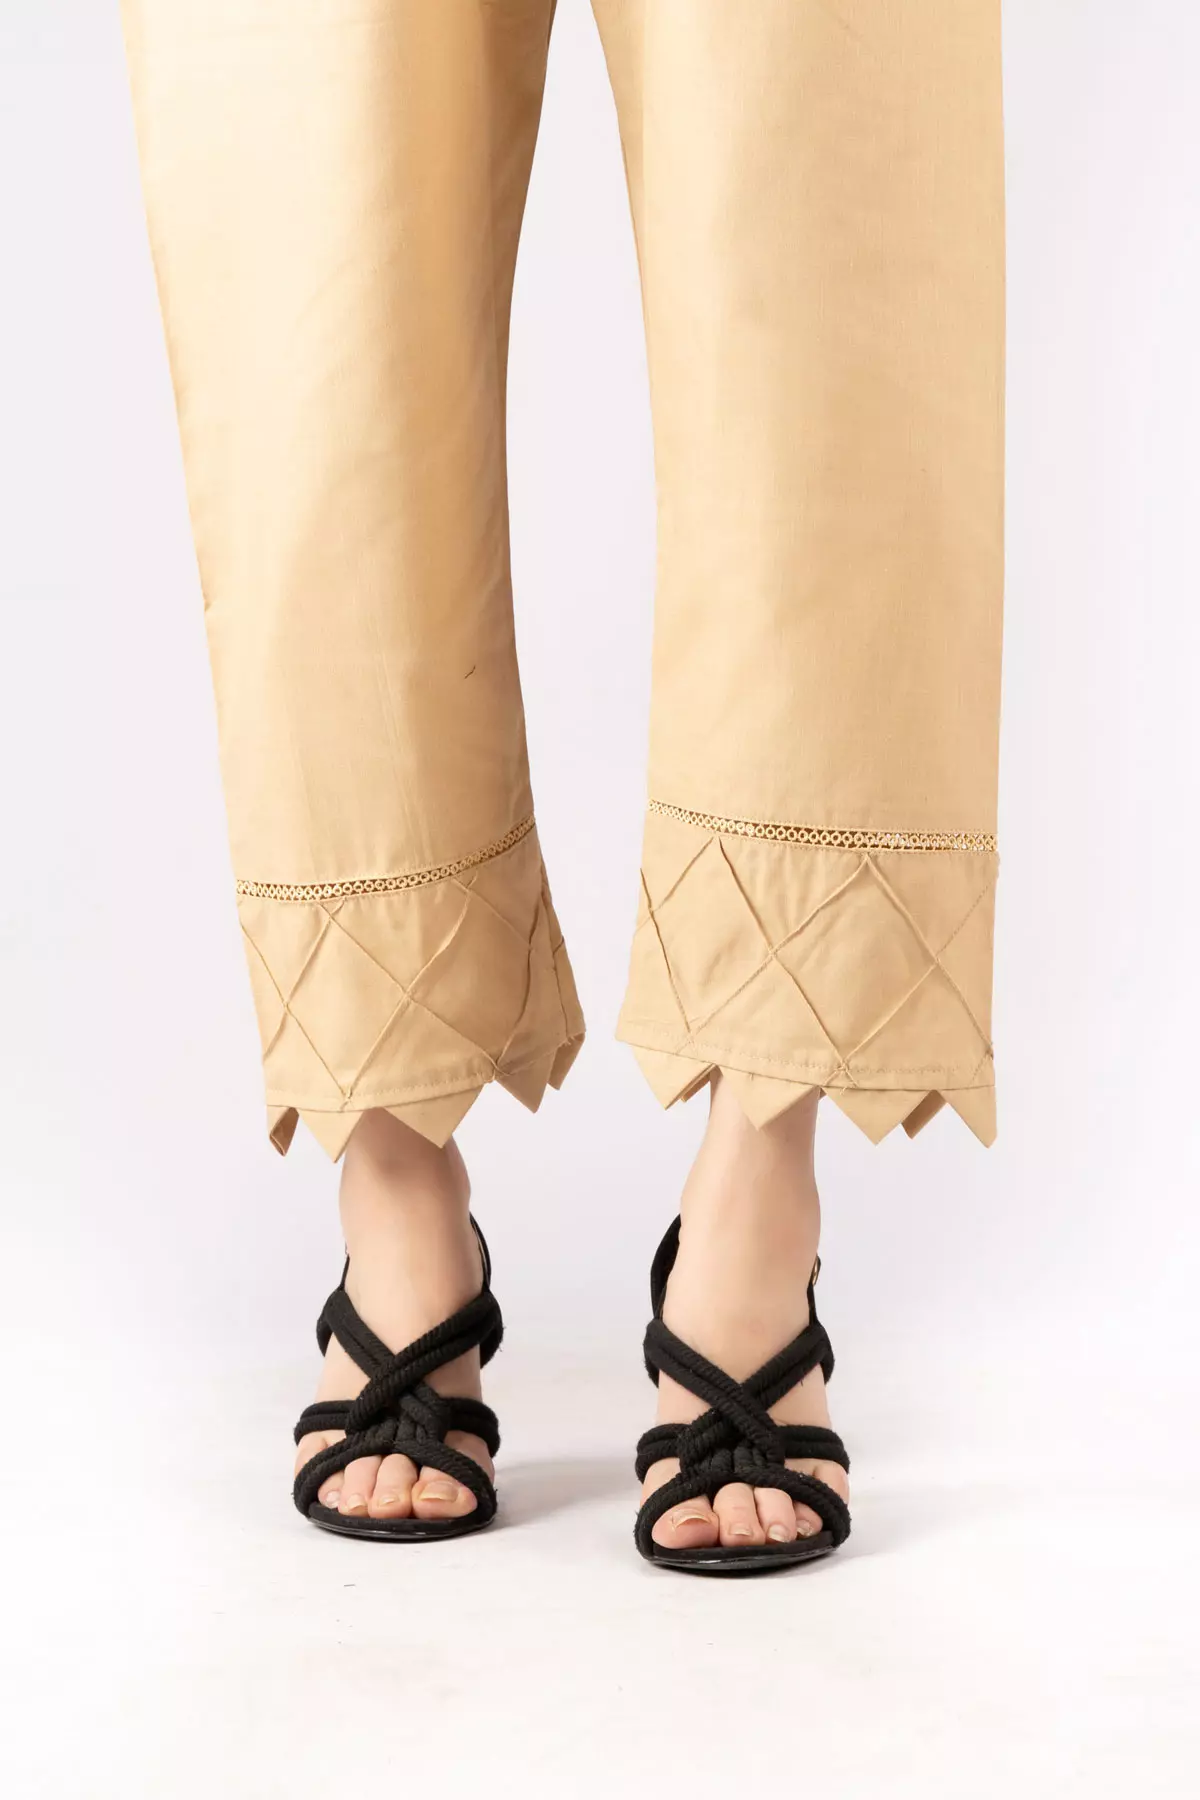 Trouser designs 20212022  Latest trouser designs  New trouser design   Simple easy trouser design  YouTube